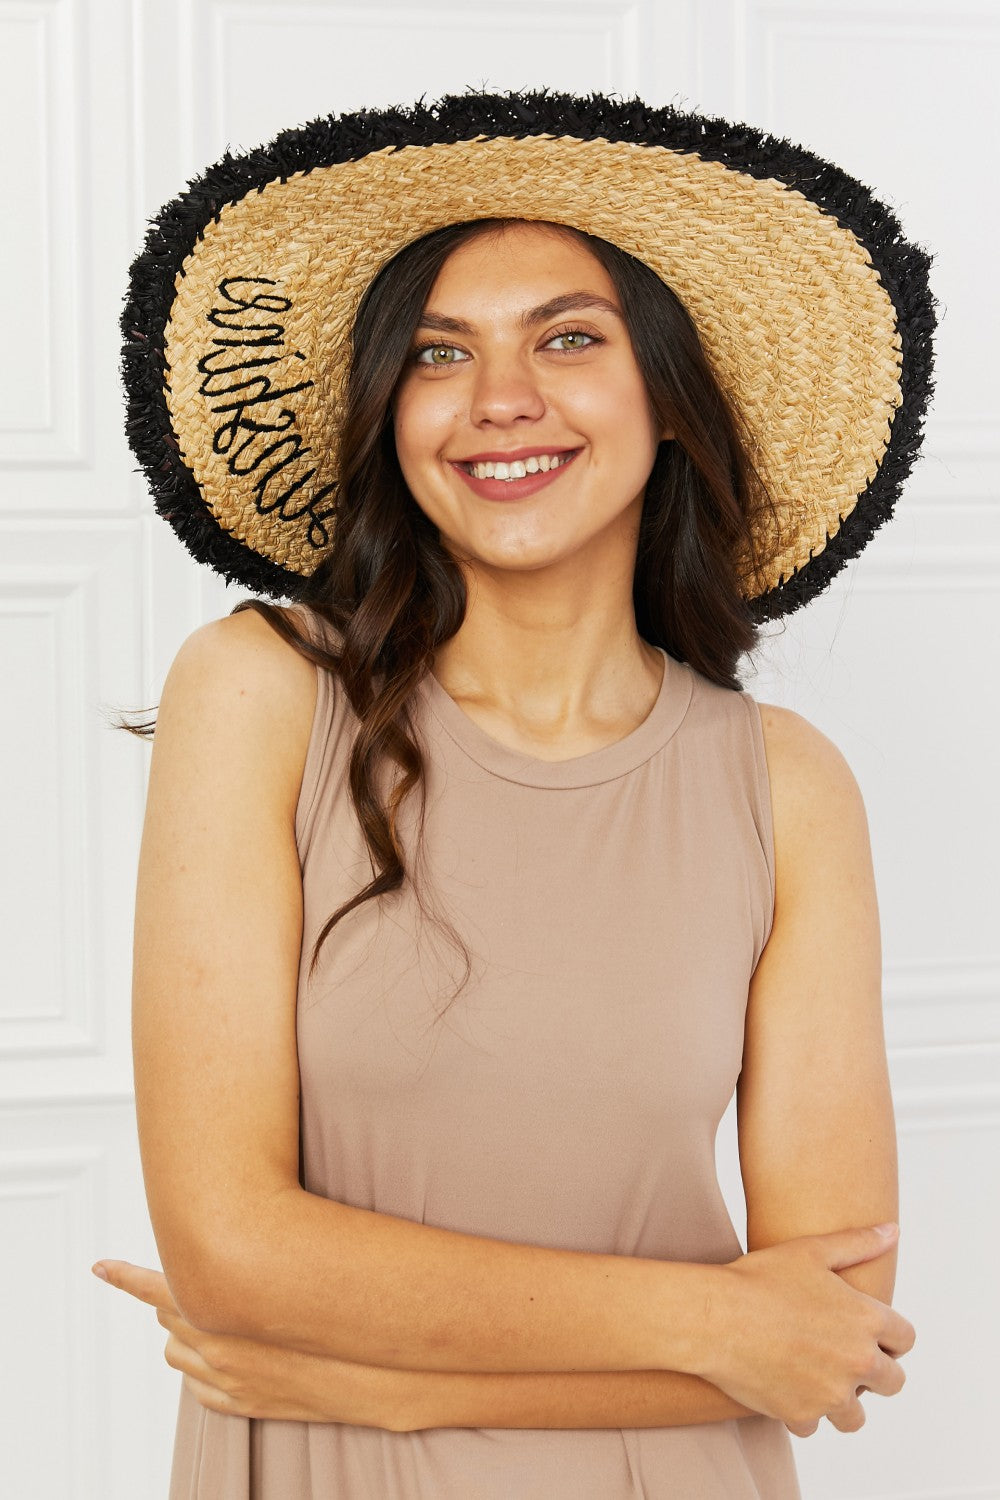 Straw hat with black fringe with sunshine written in black cursive print